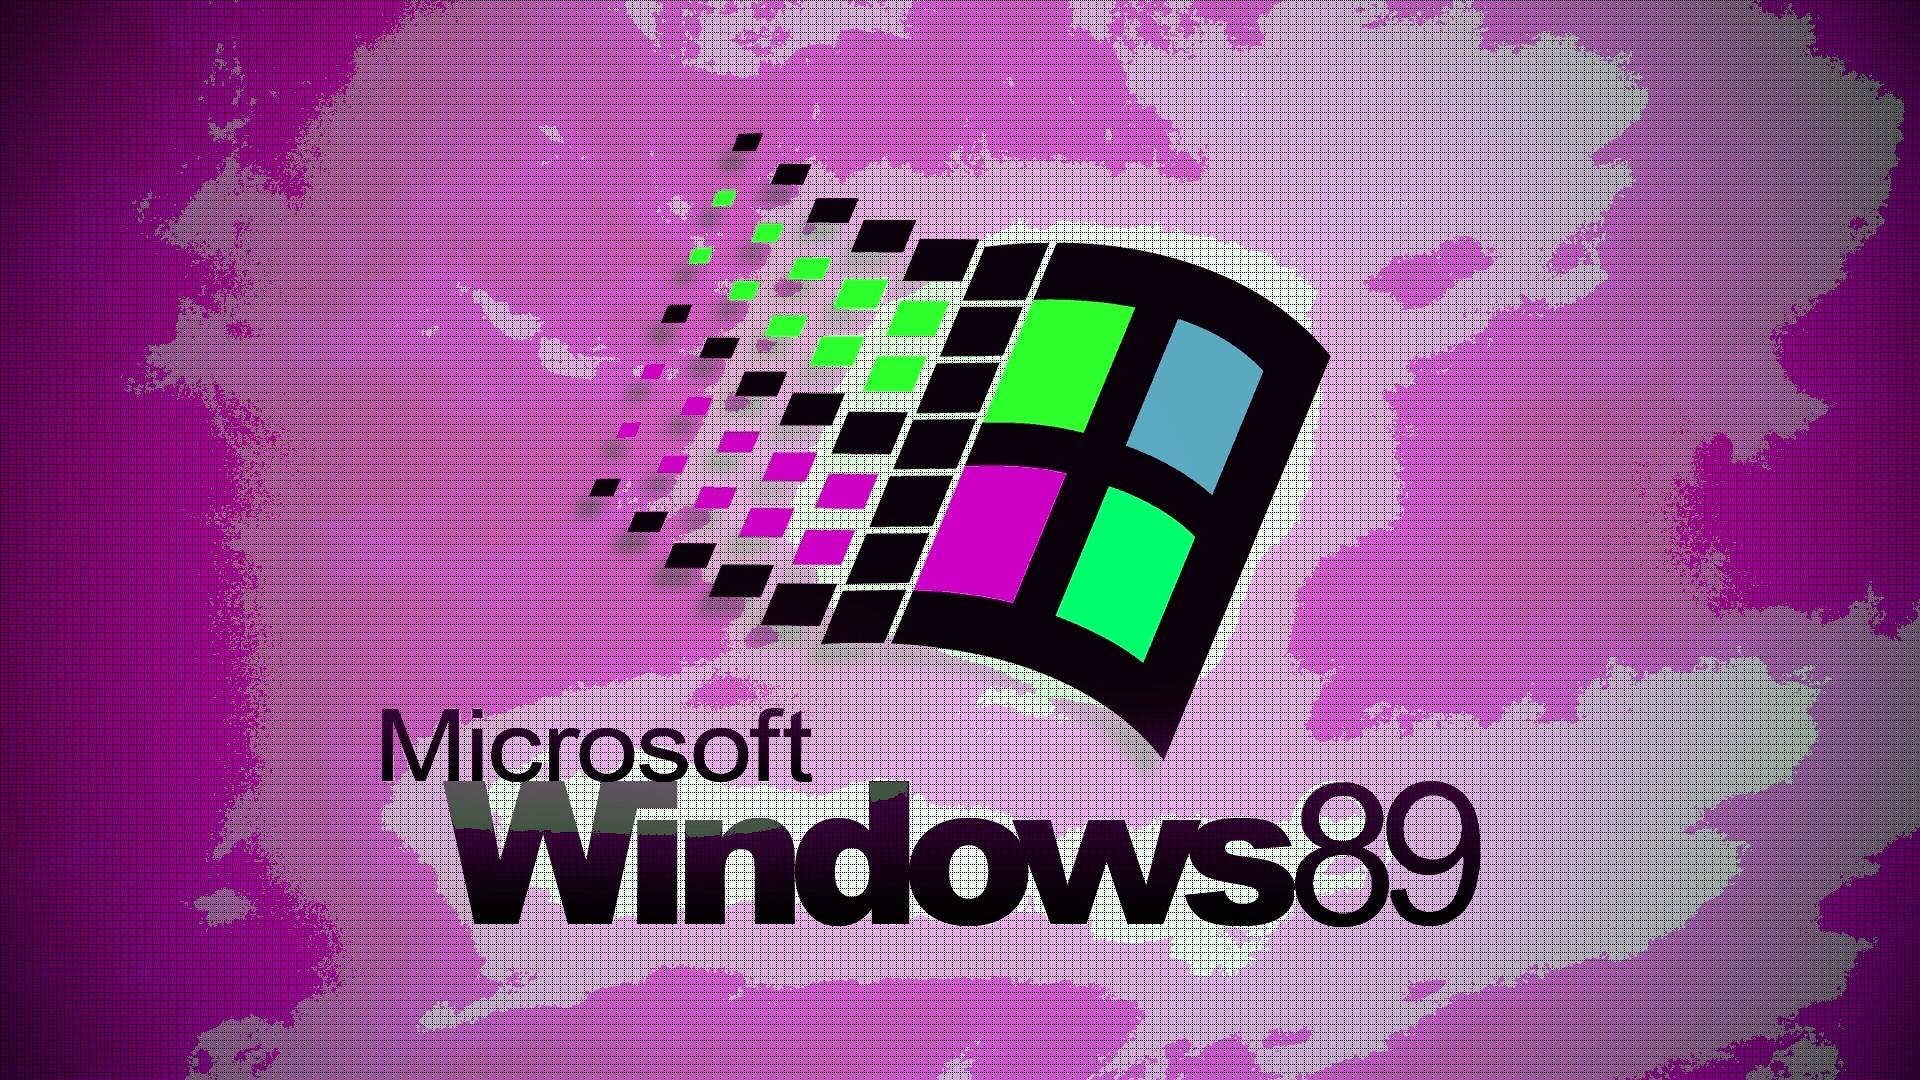 The microsoft windows 98 logo - Windows 98